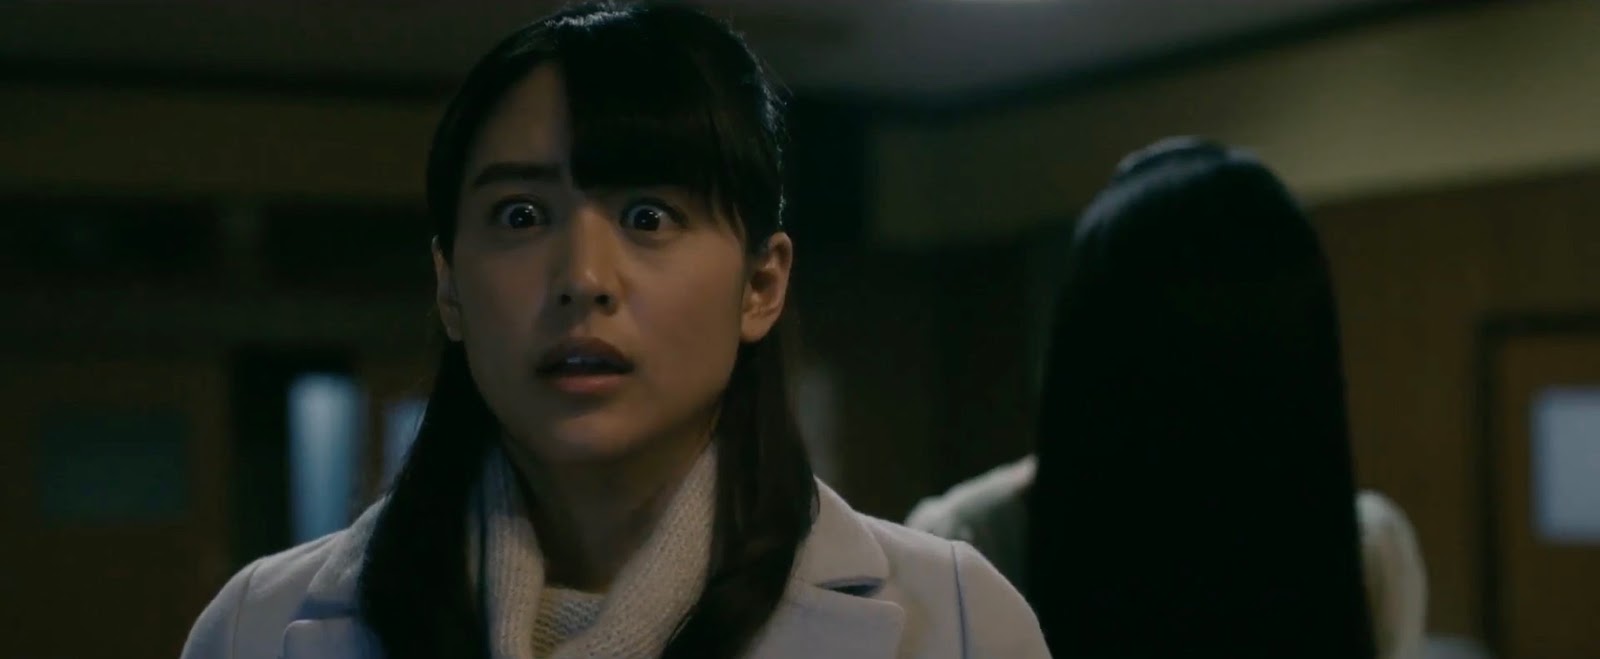 Sadako Vs Kayako Brings Two Japanese Horror Icons Together | The Movie Bit